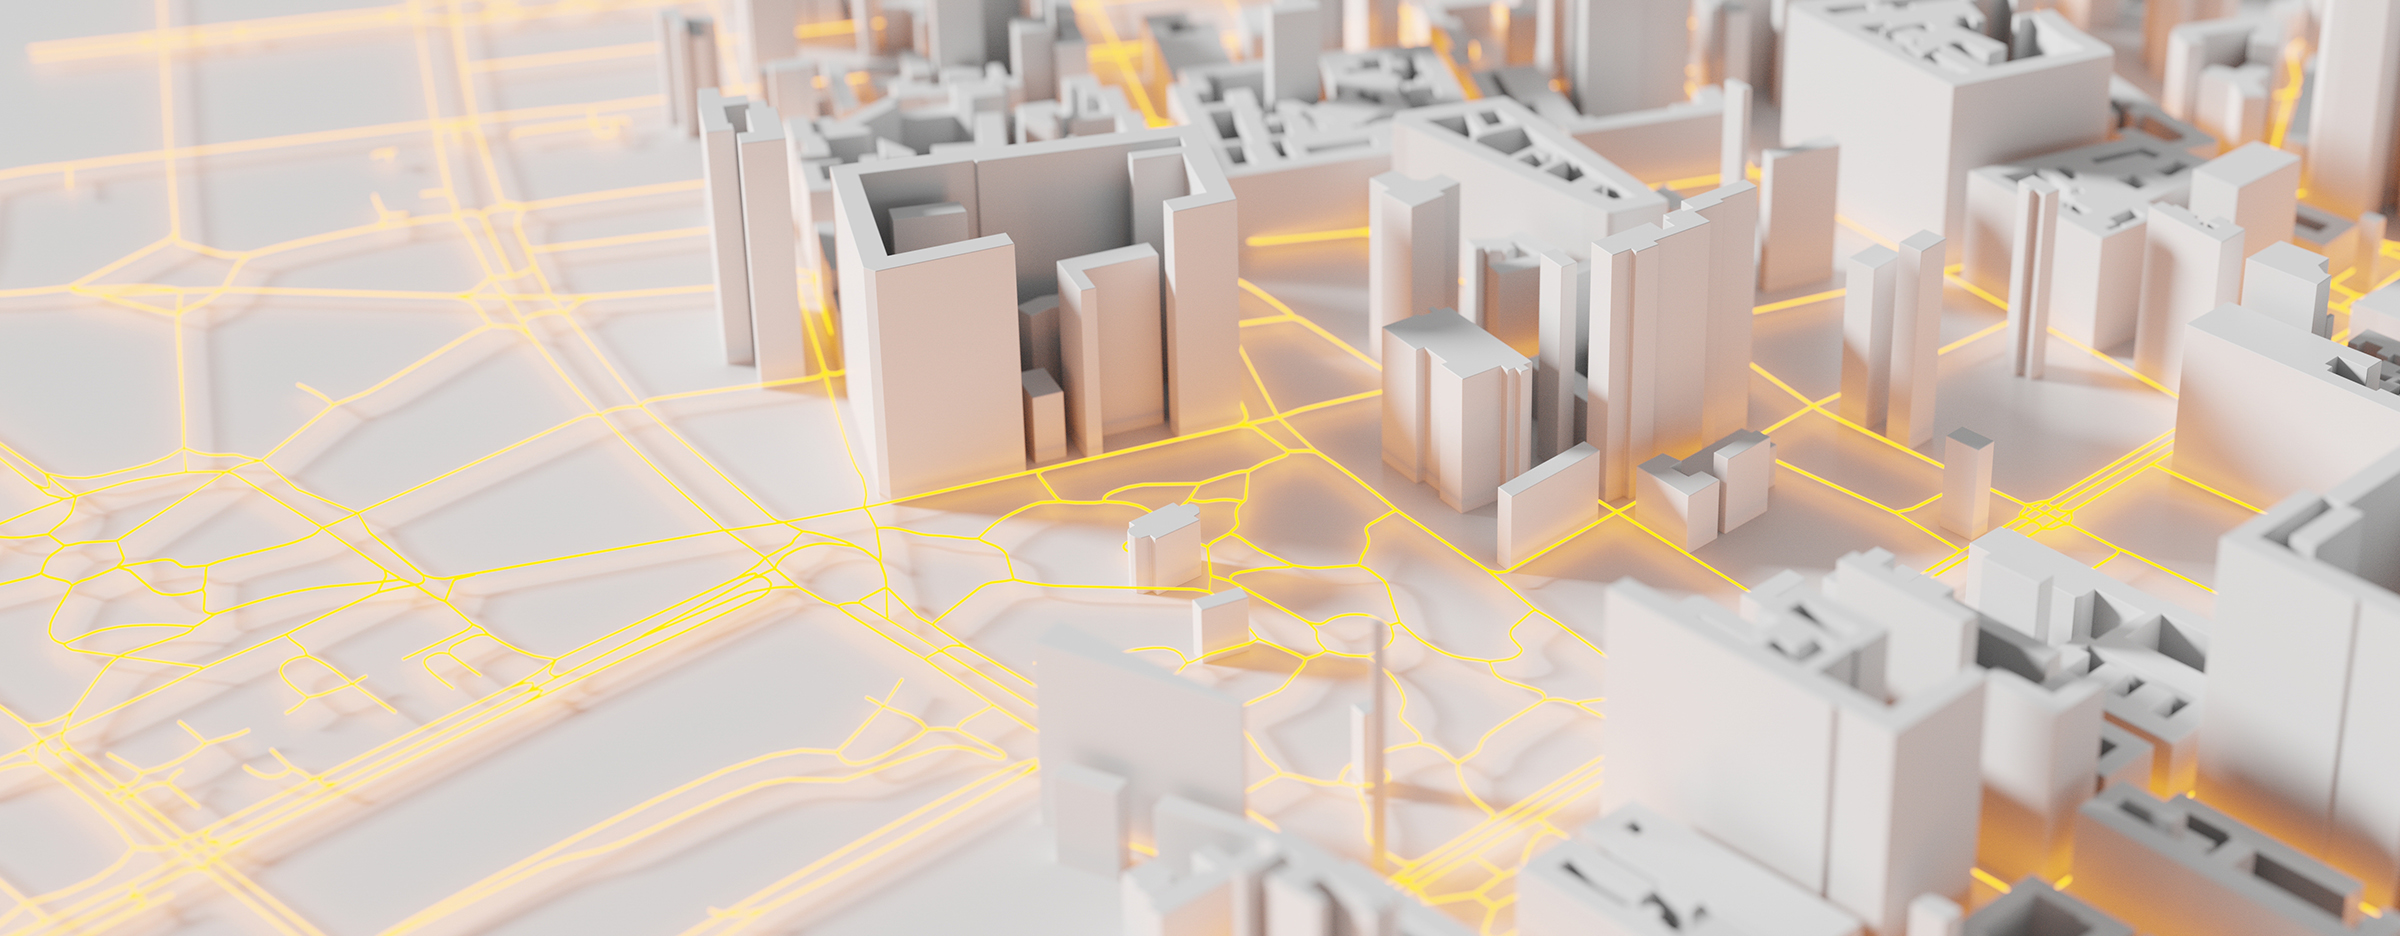 Schematic representation of a model city with futuristic elements